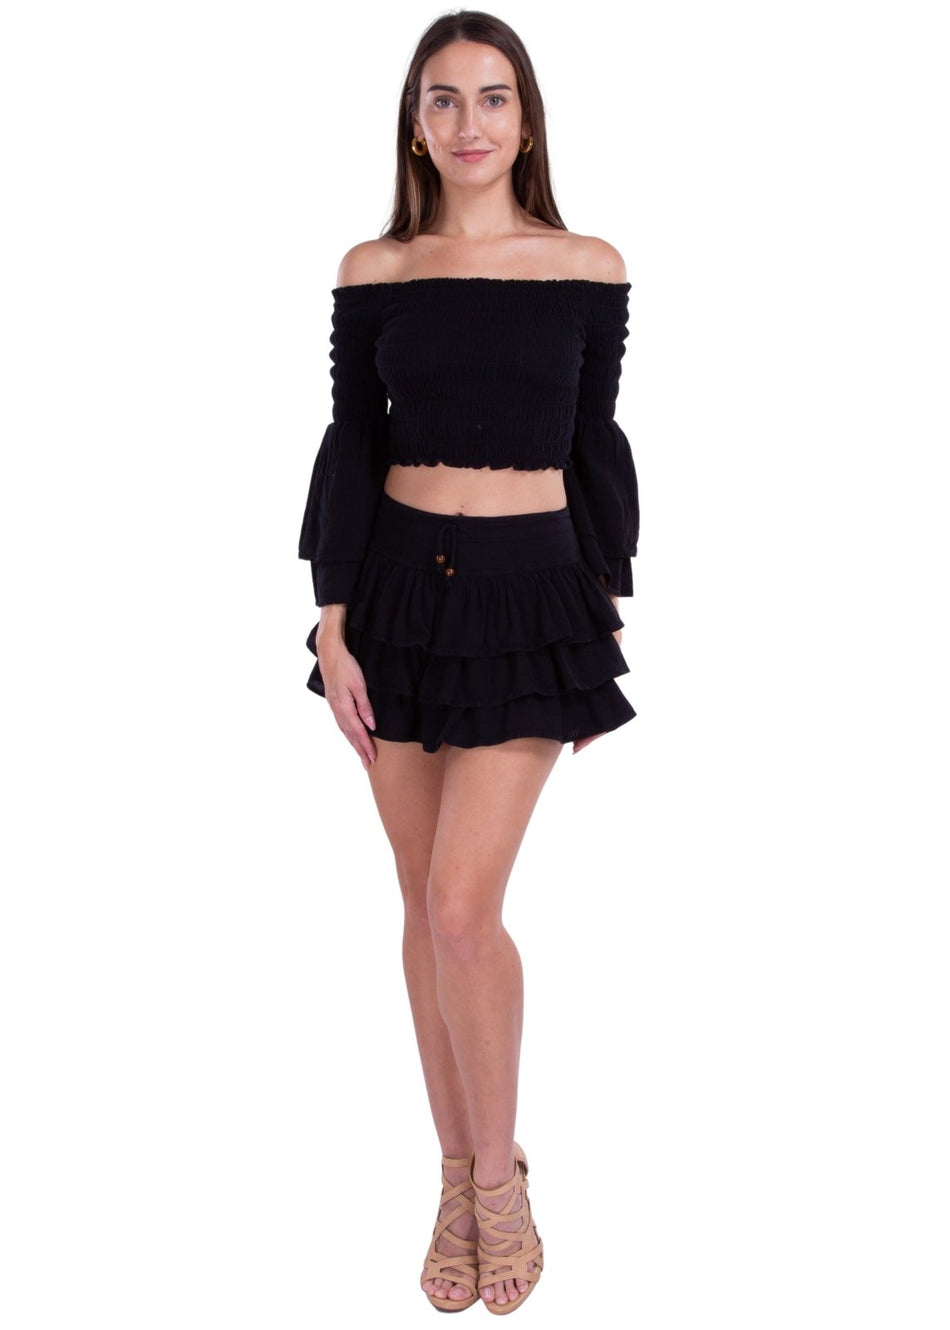 Lana' Shirred Bell Sleeve Top Black - Seaspice Resort Wear